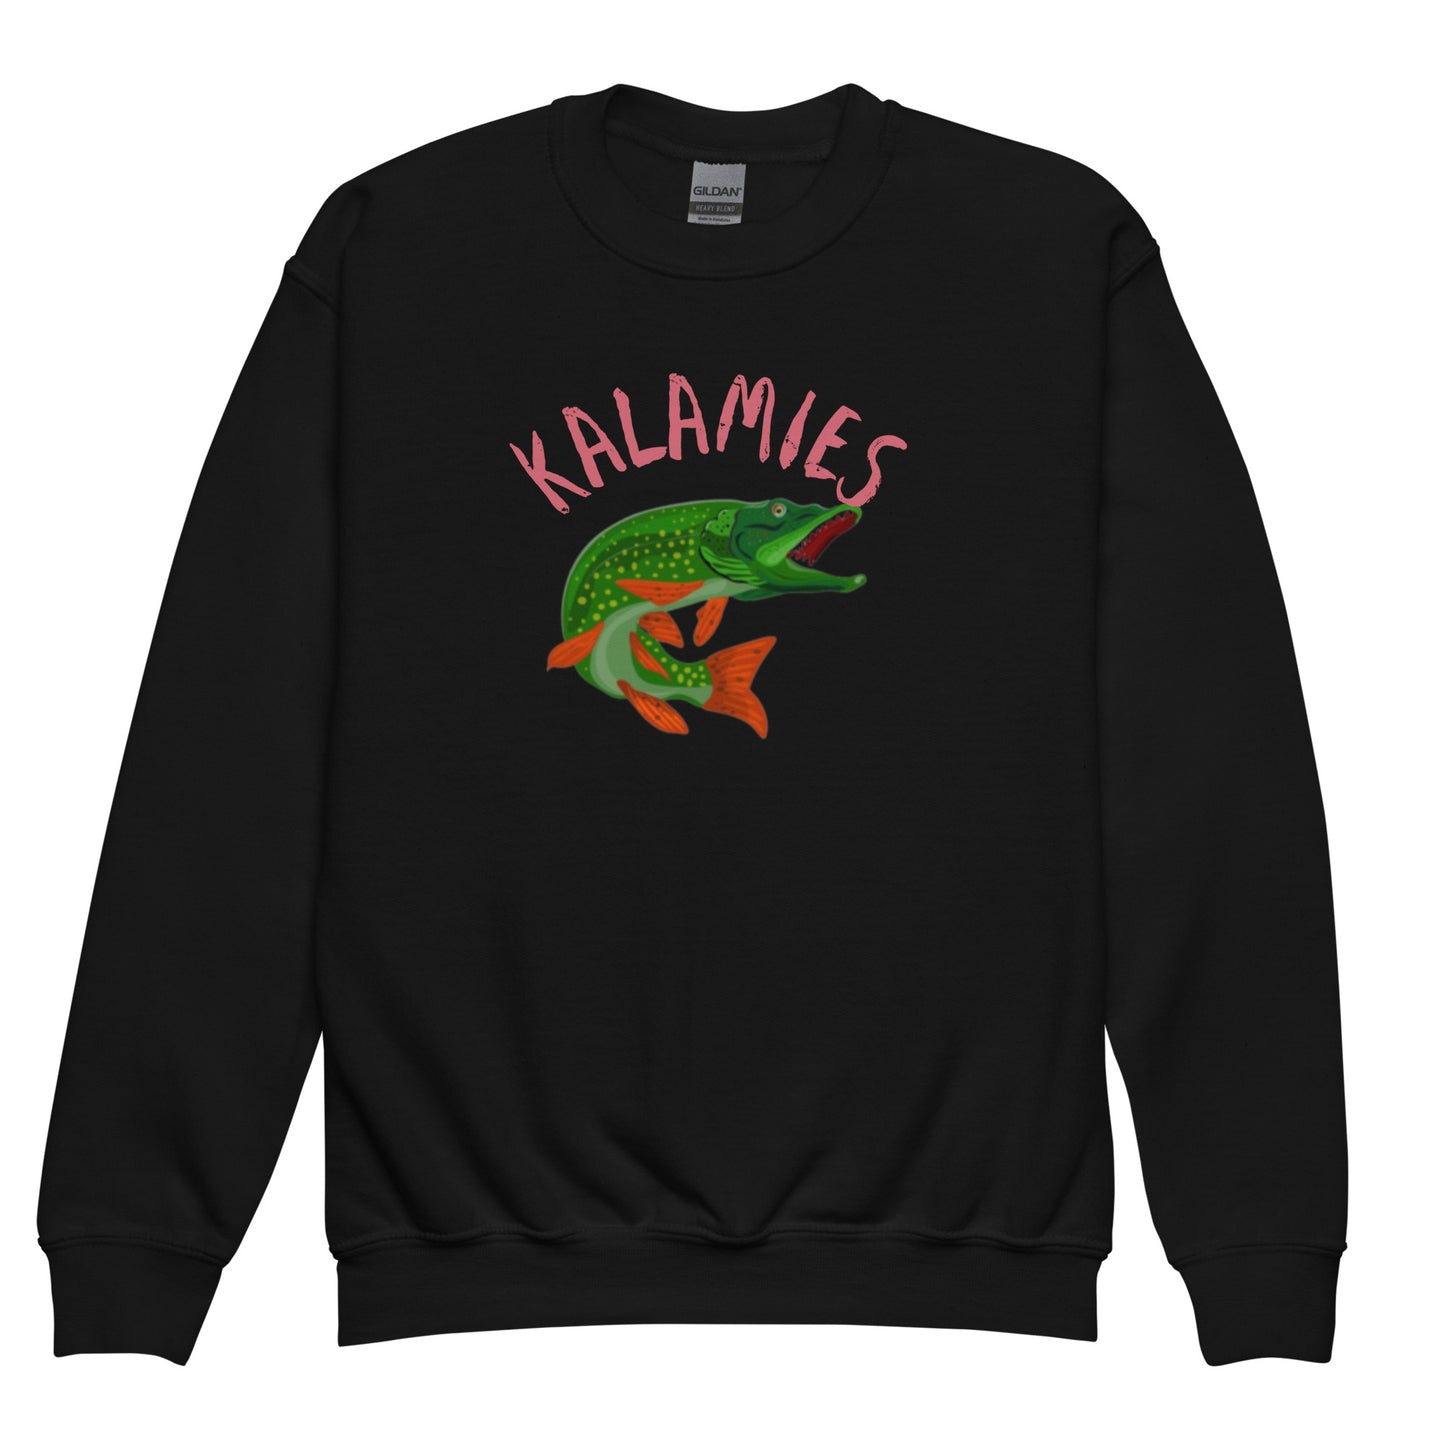 "Kalamies" children's hooded sweatshirt